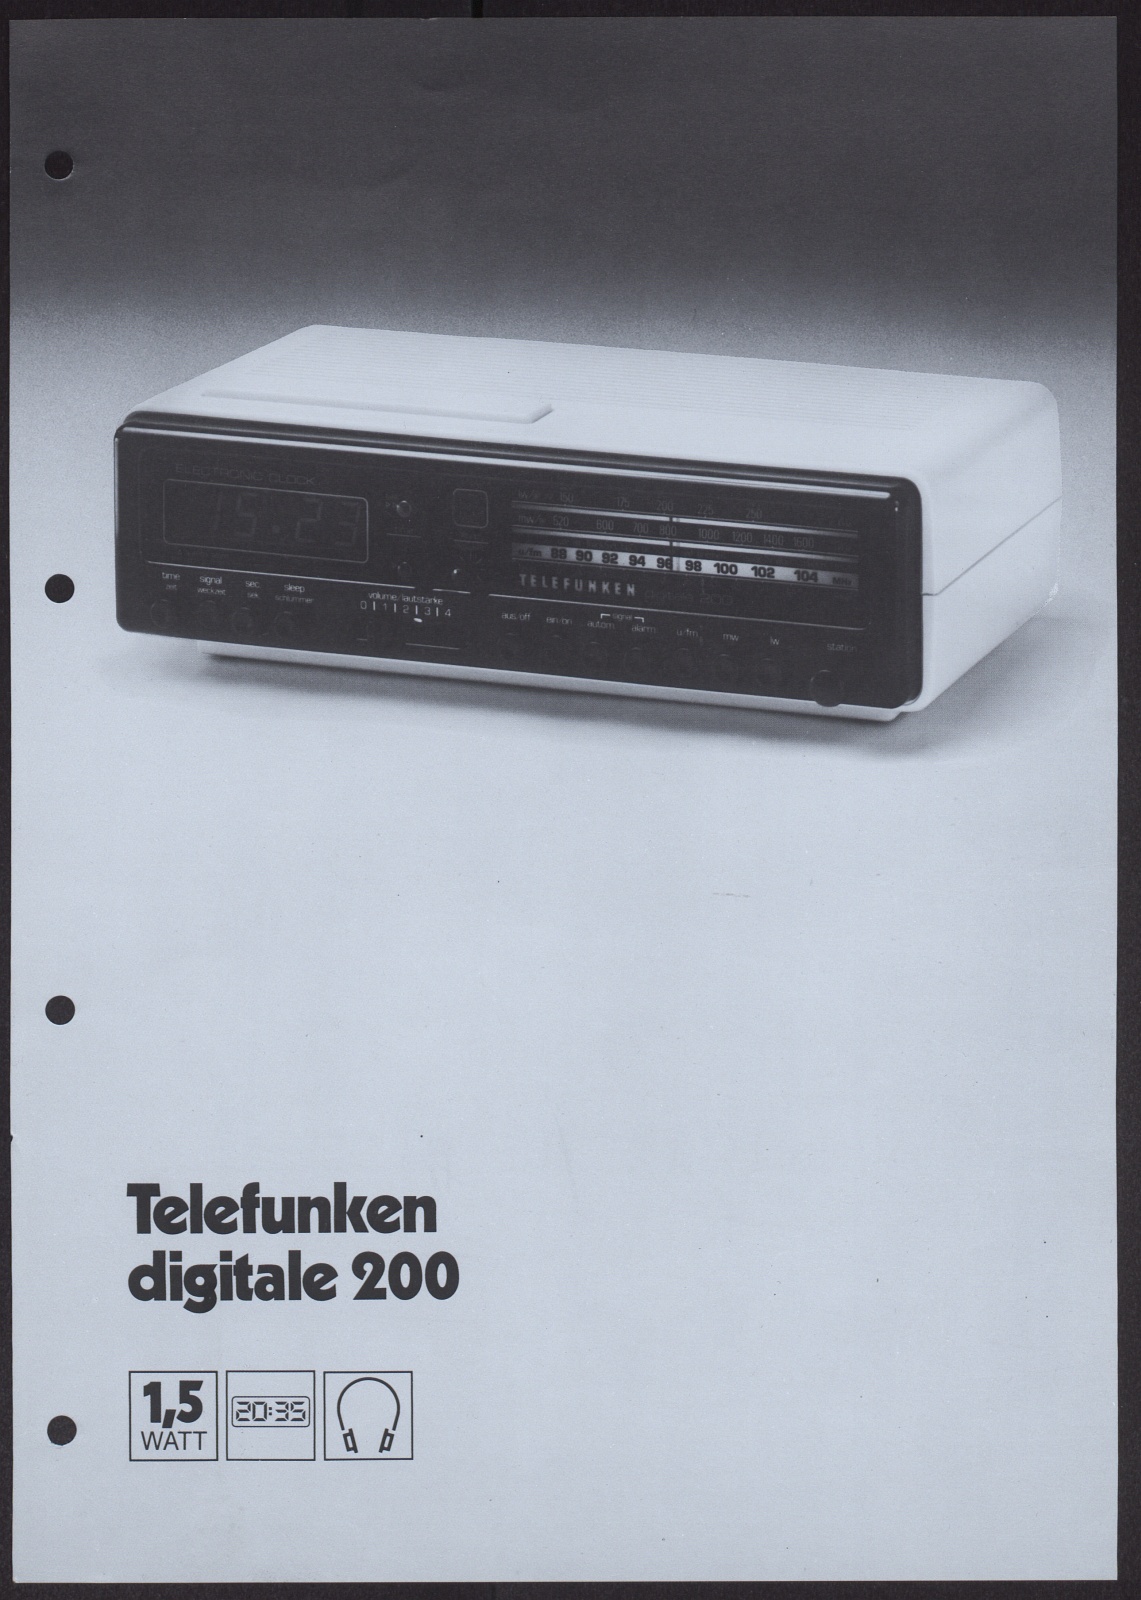 Werbeprospekt: Telefunken digitale 200 (Stiftung Deutsches Technikmuseum Berlin CC0)